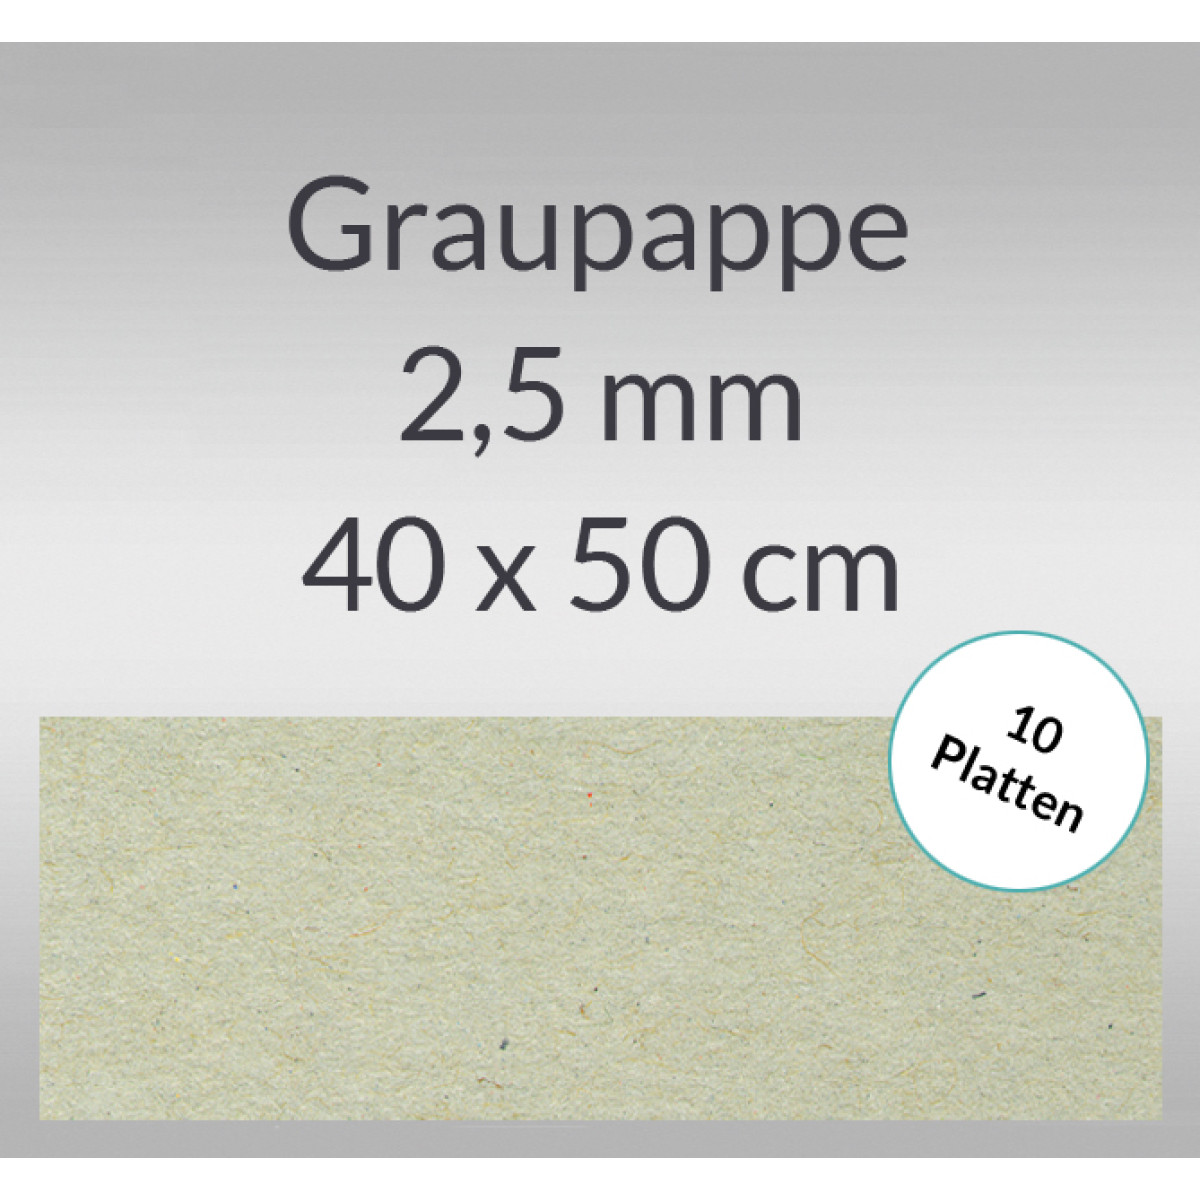 Graupappe 40 x 50 cm - 2,5 mm